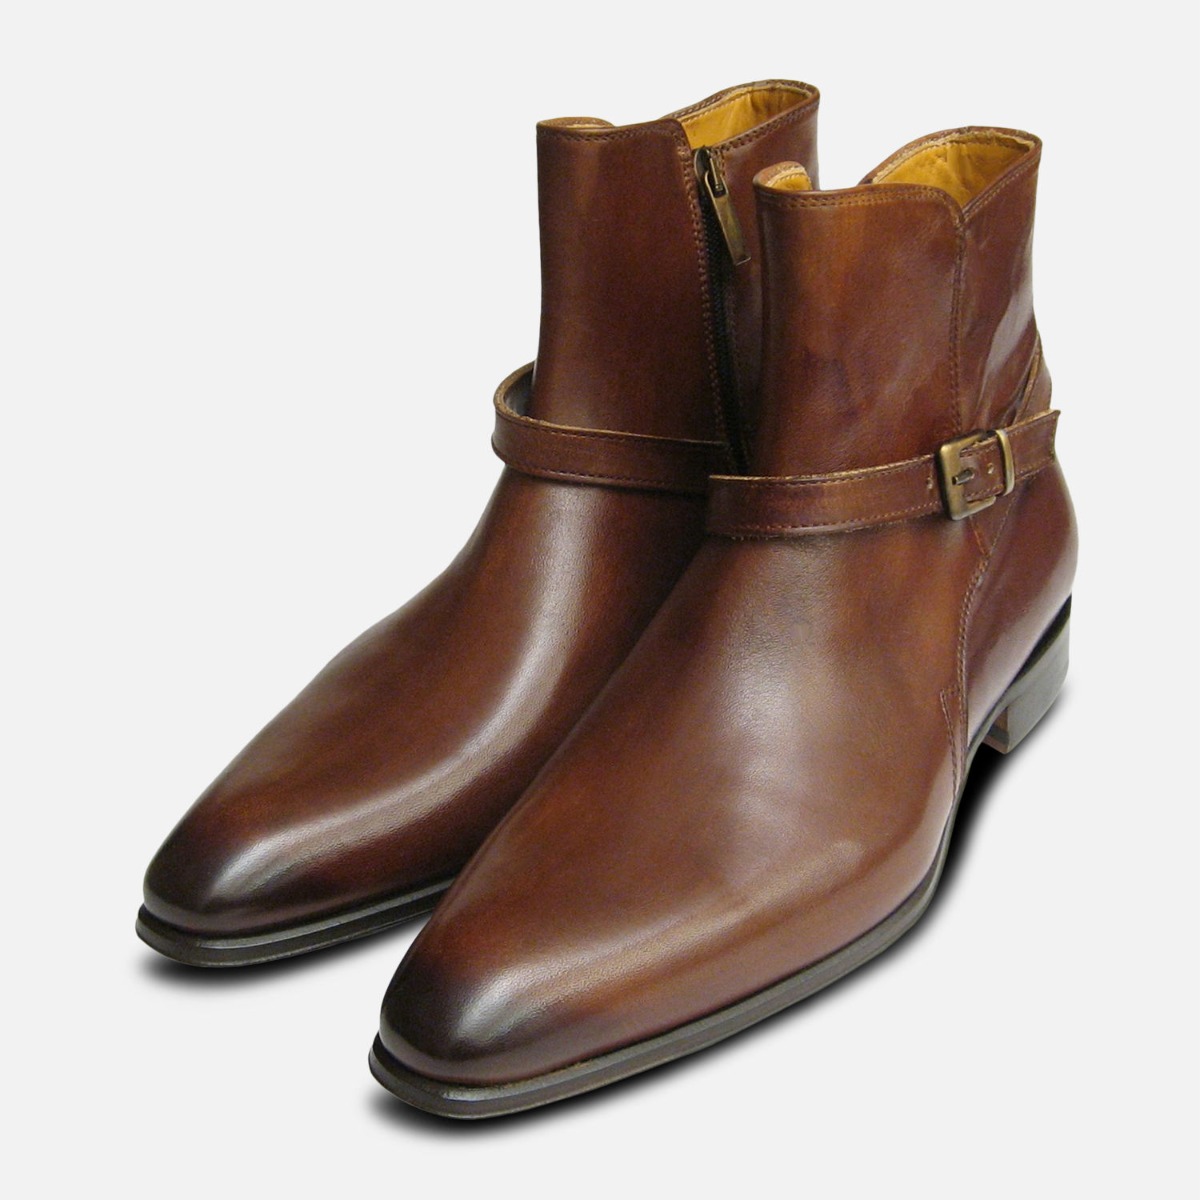 Designer Mens Brown Jodhpur Zip Boots | eBay